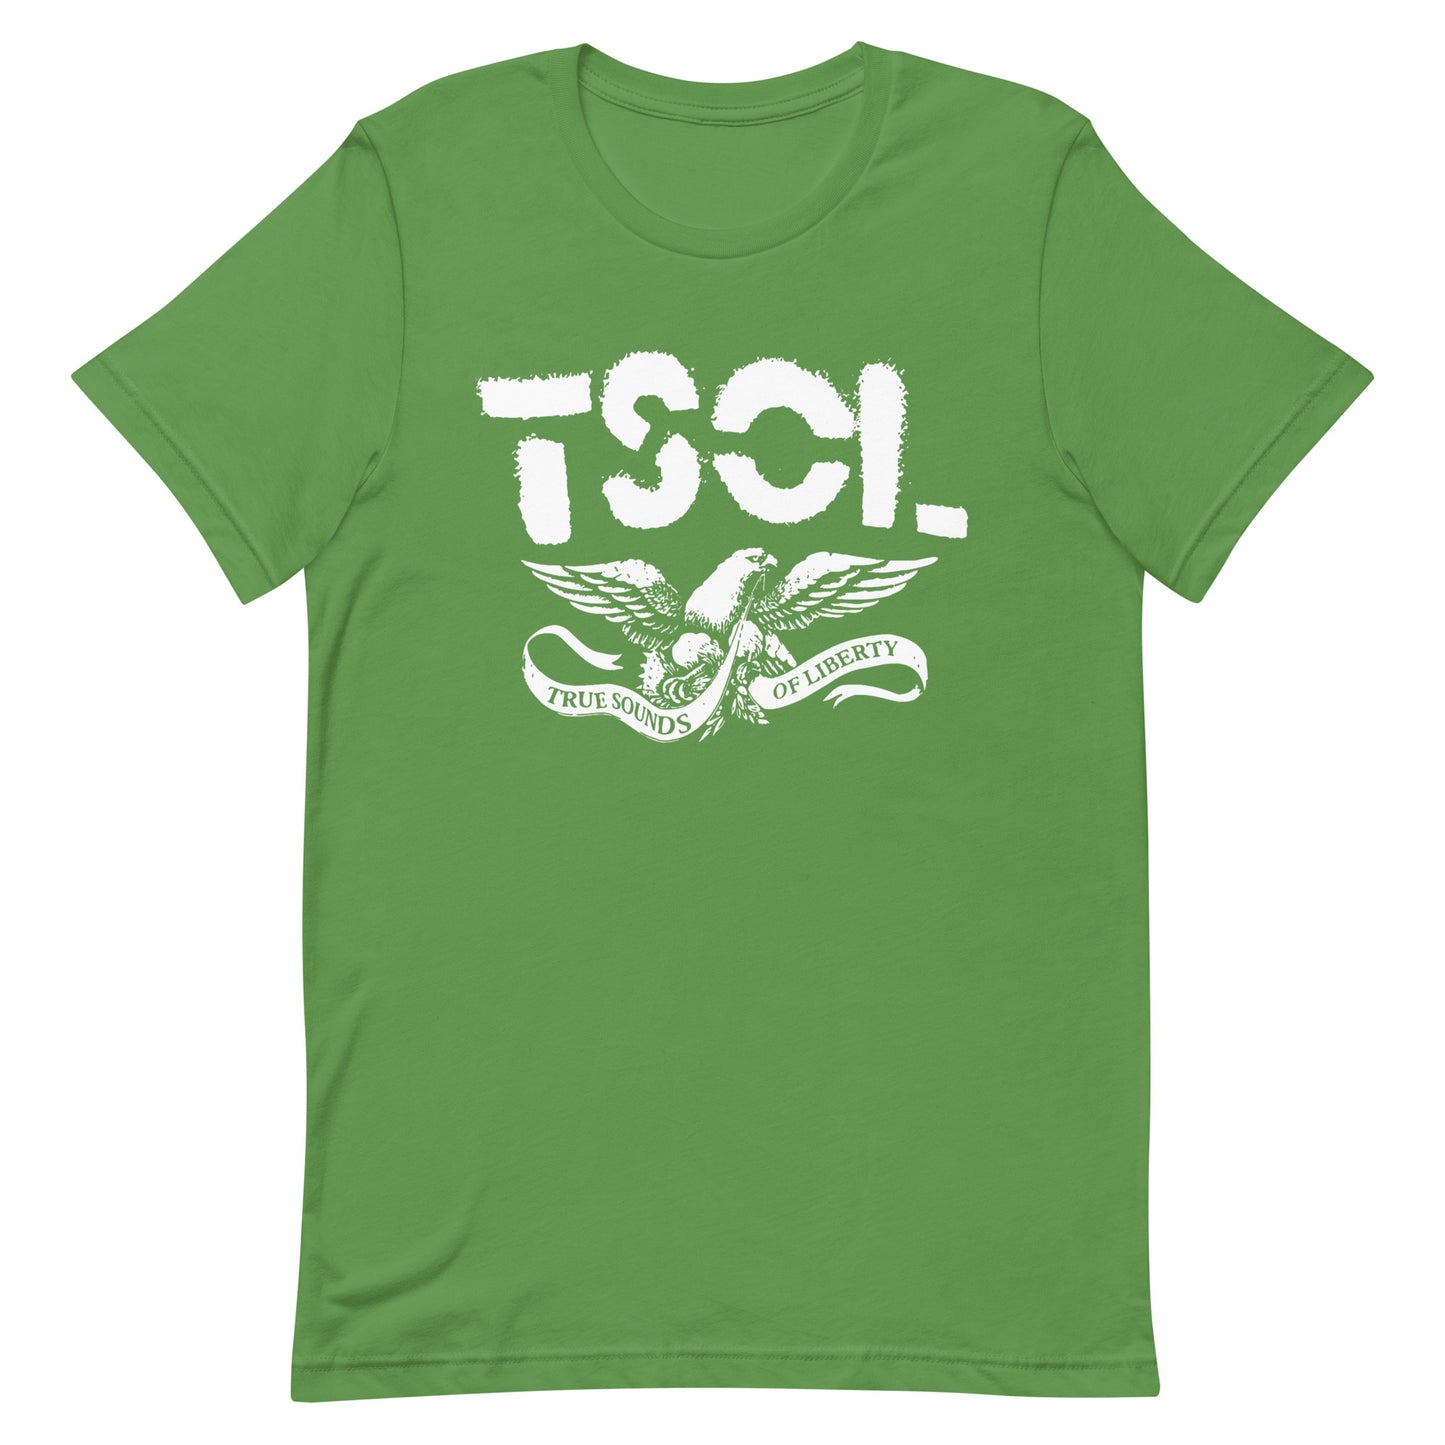 TSOL - True Sounds Of Liberty T-Shirt